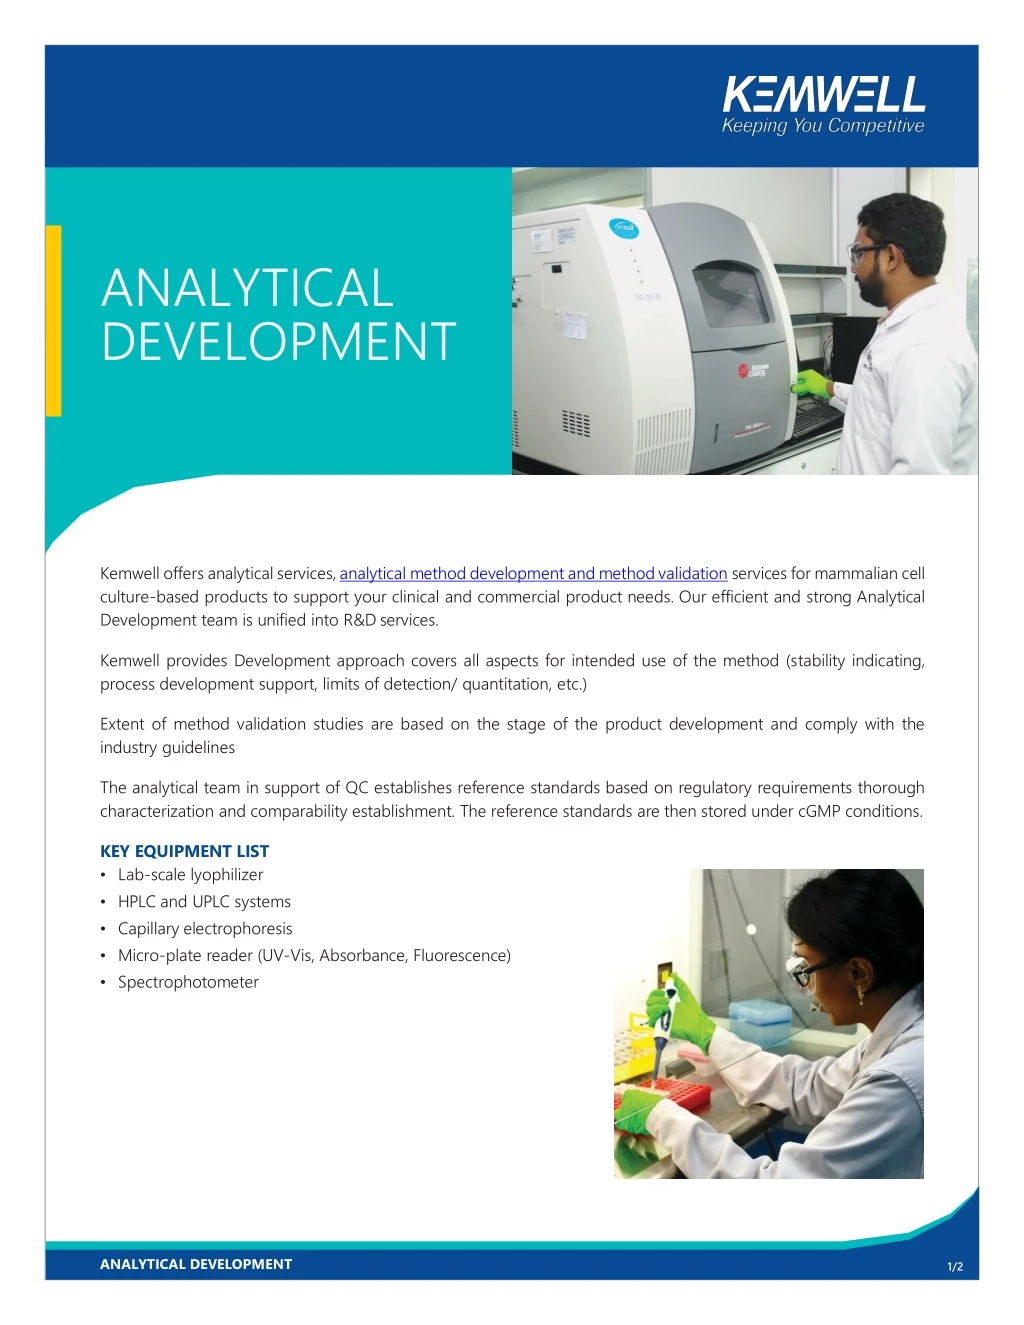 analytical development kemwell offers analytical